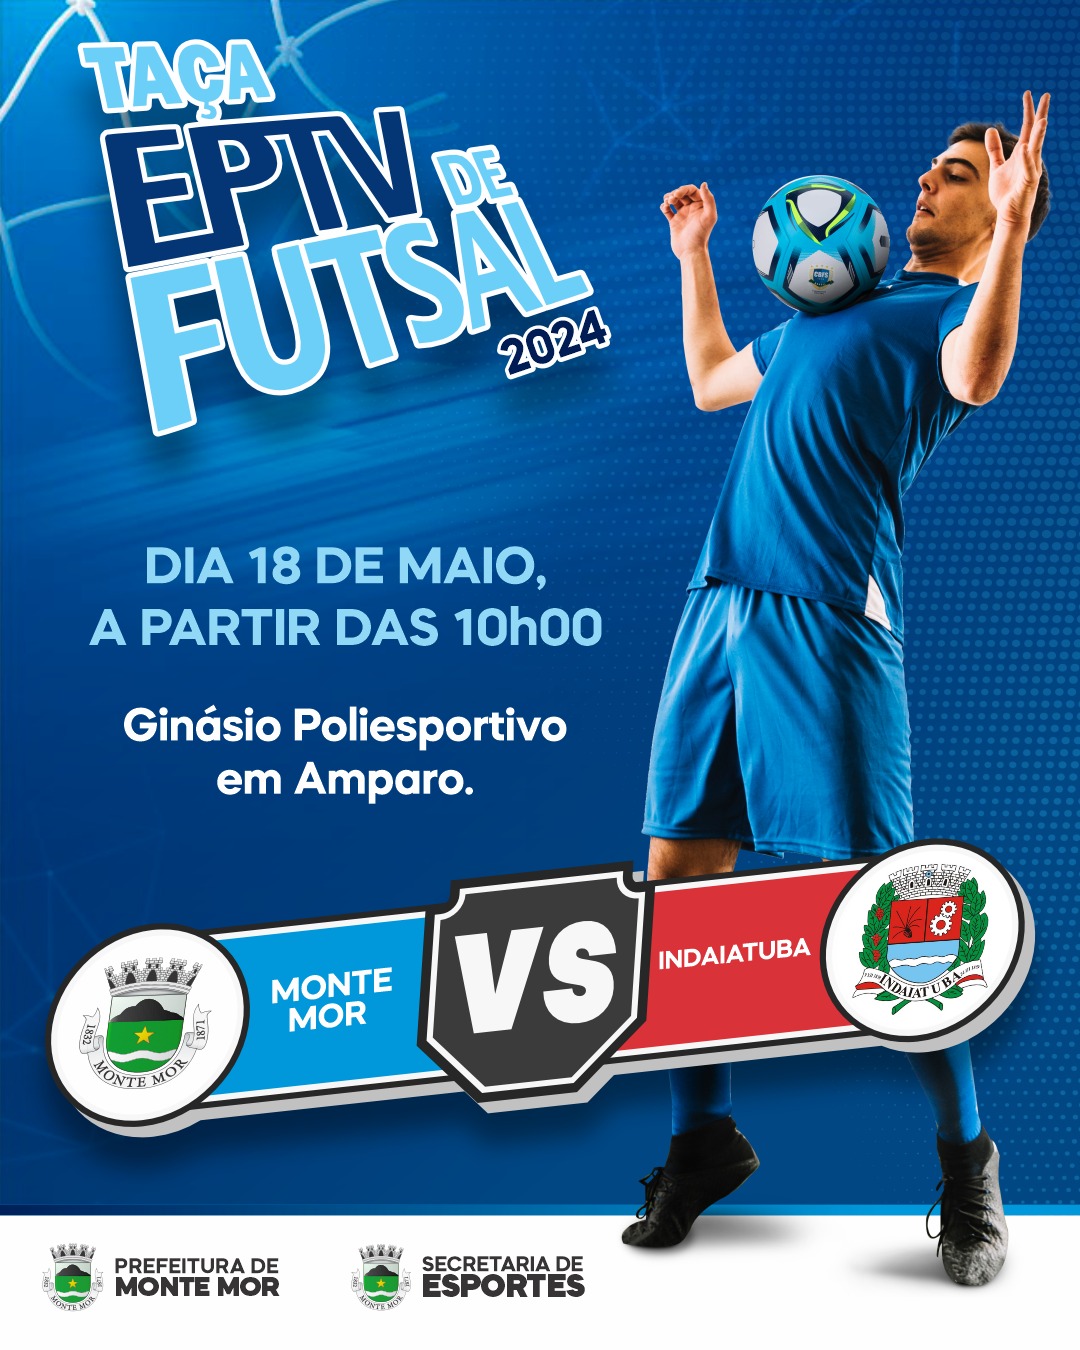 Taça EPTV de Futsal 2024.